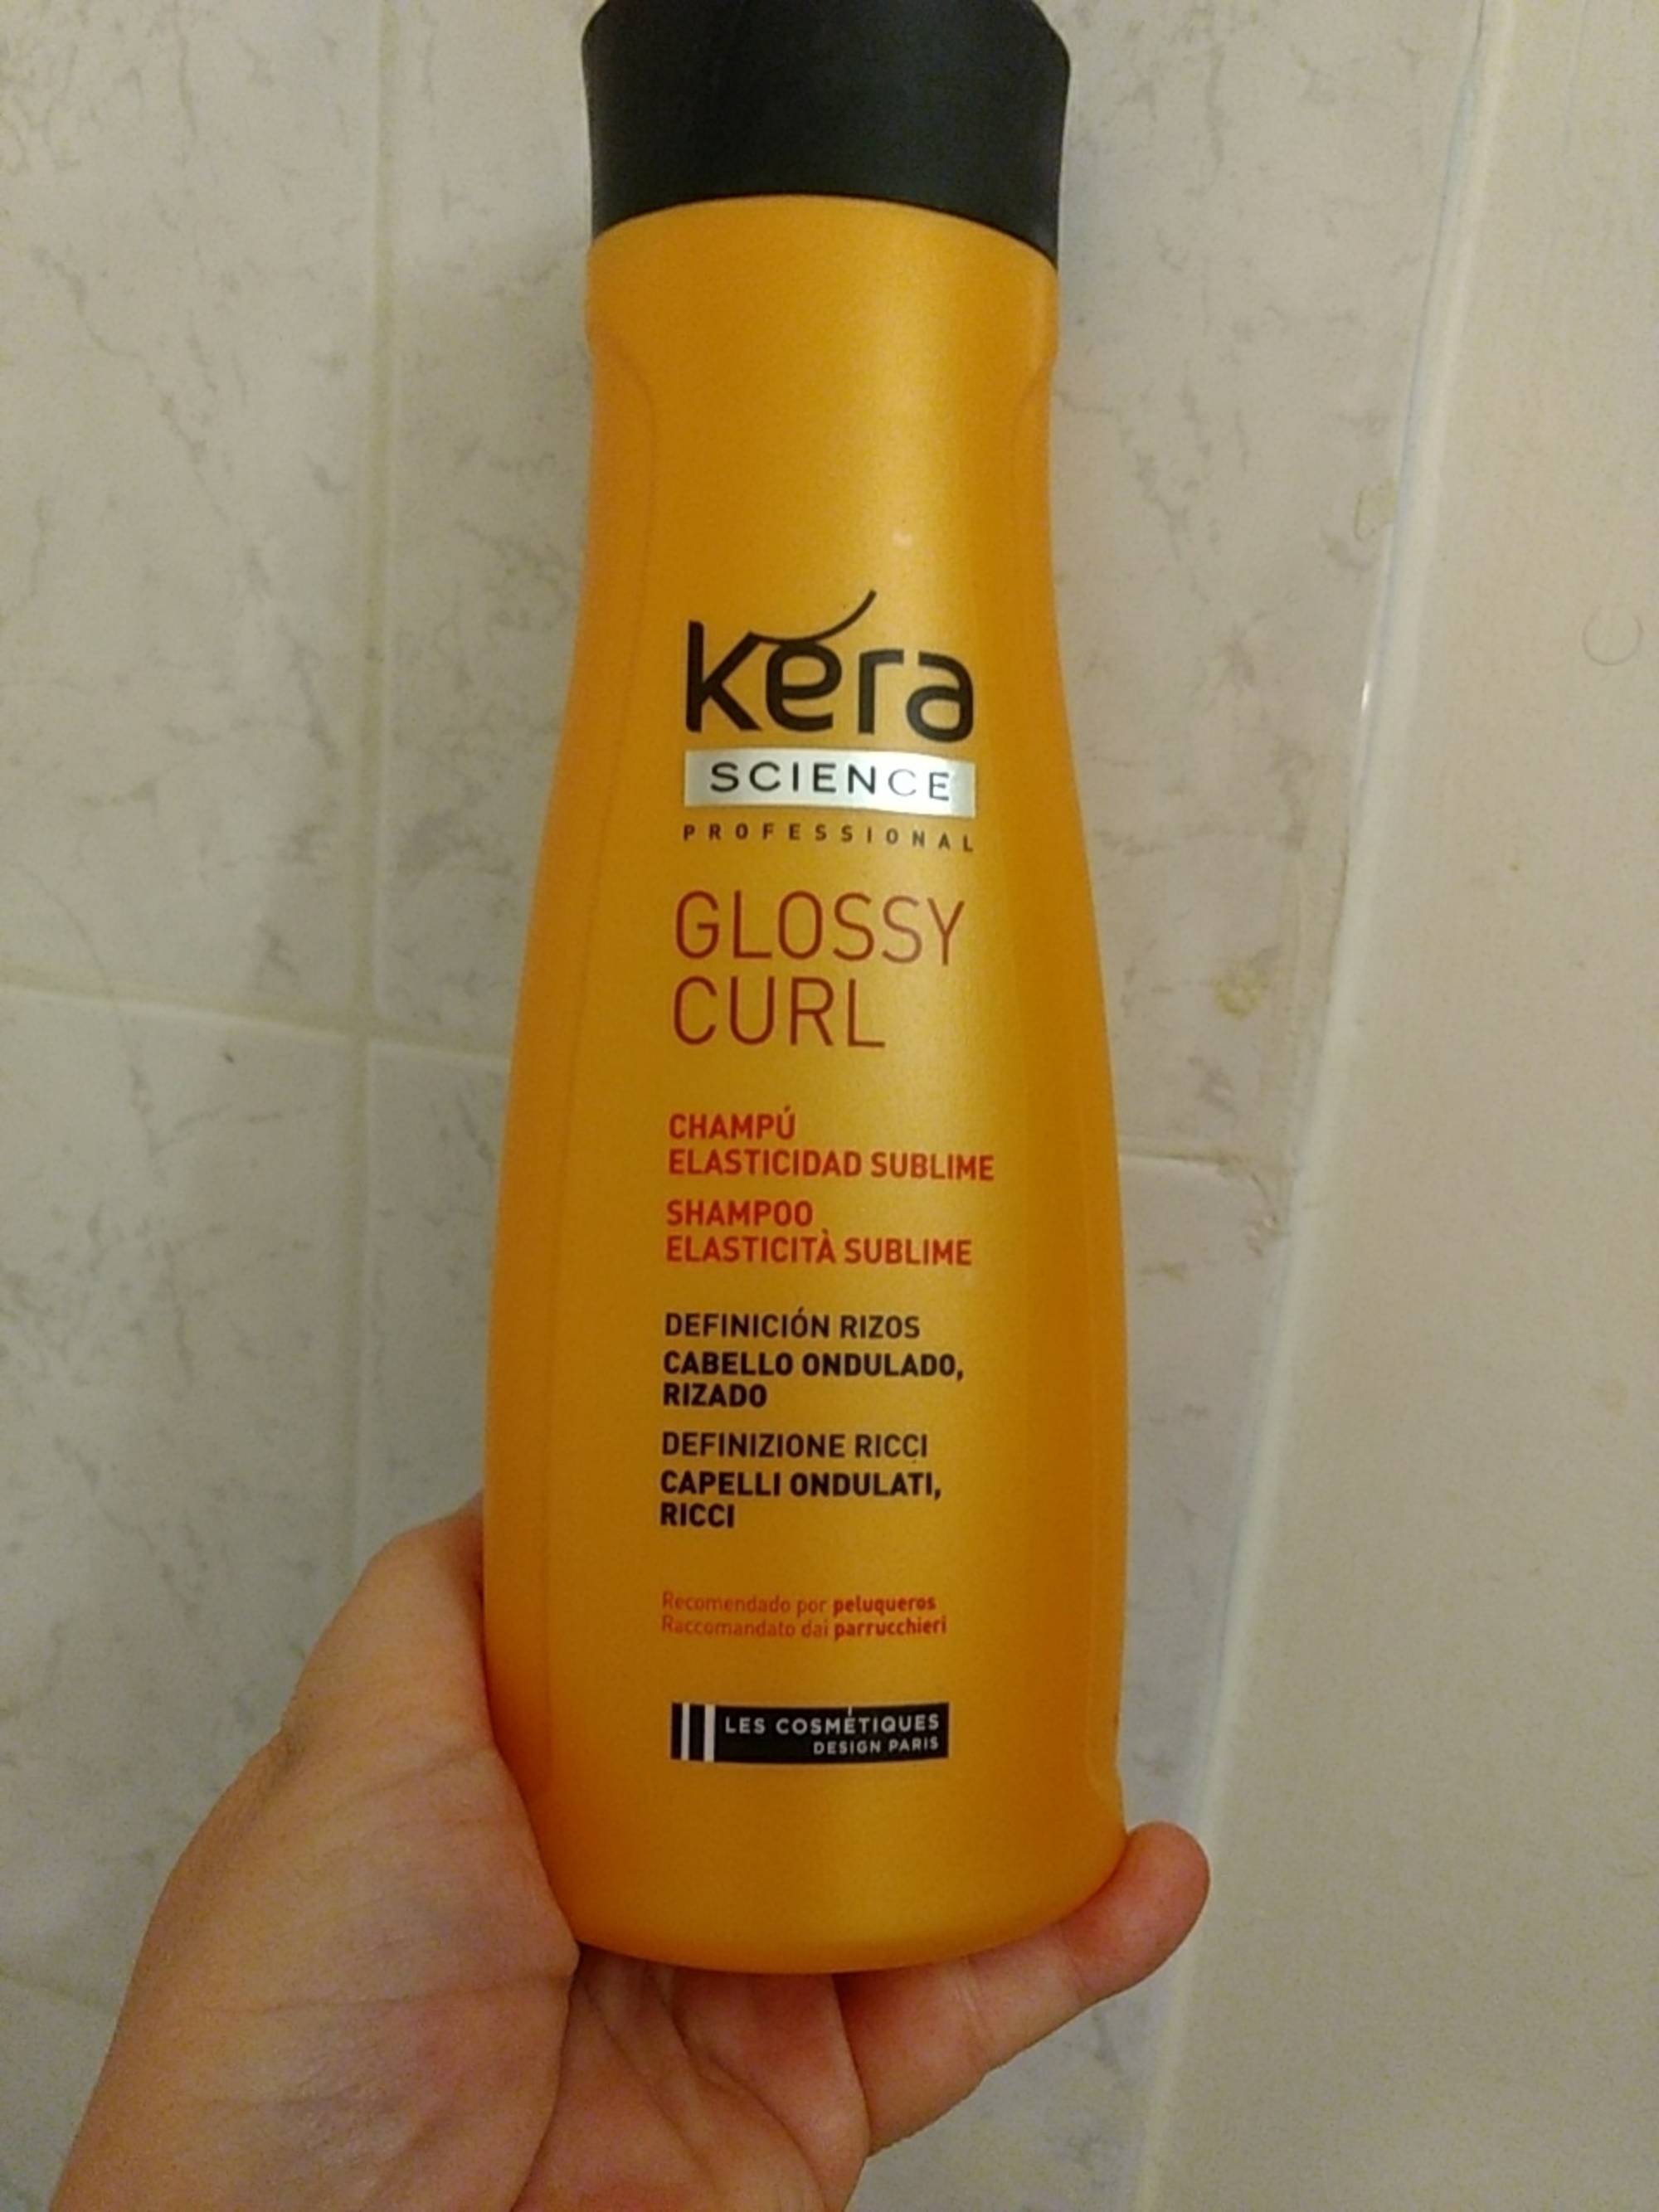 LES COSMÉTIQUE DESIGN PARIS - Kera science - Glossy curl shampoo elasticità sublime